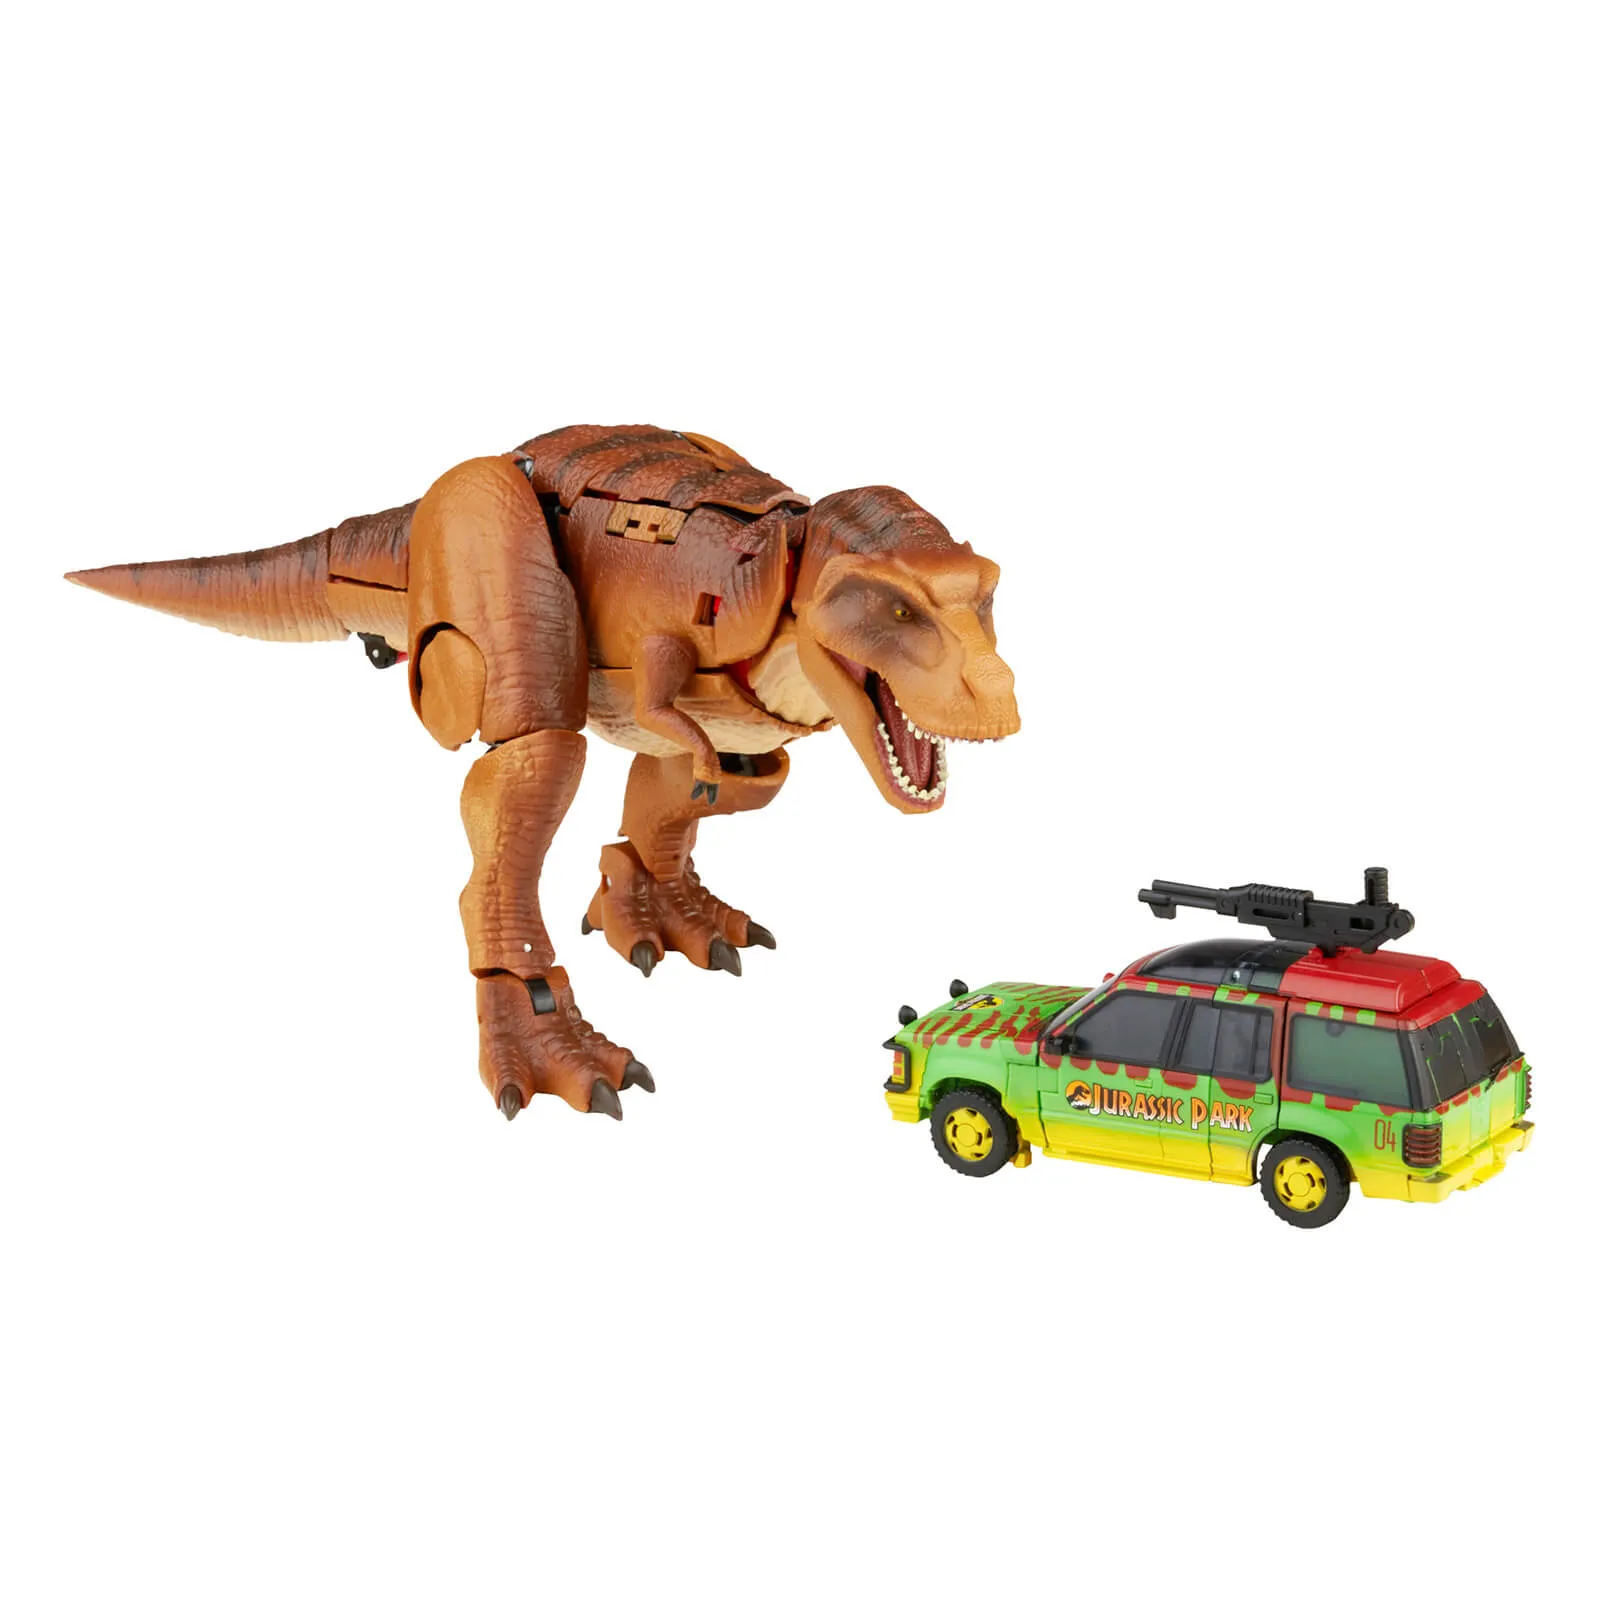  Transformers Collaborative: Jurassic Park Mash-Up, Tyrannocon Rex & Autobot JP93 Action Figure